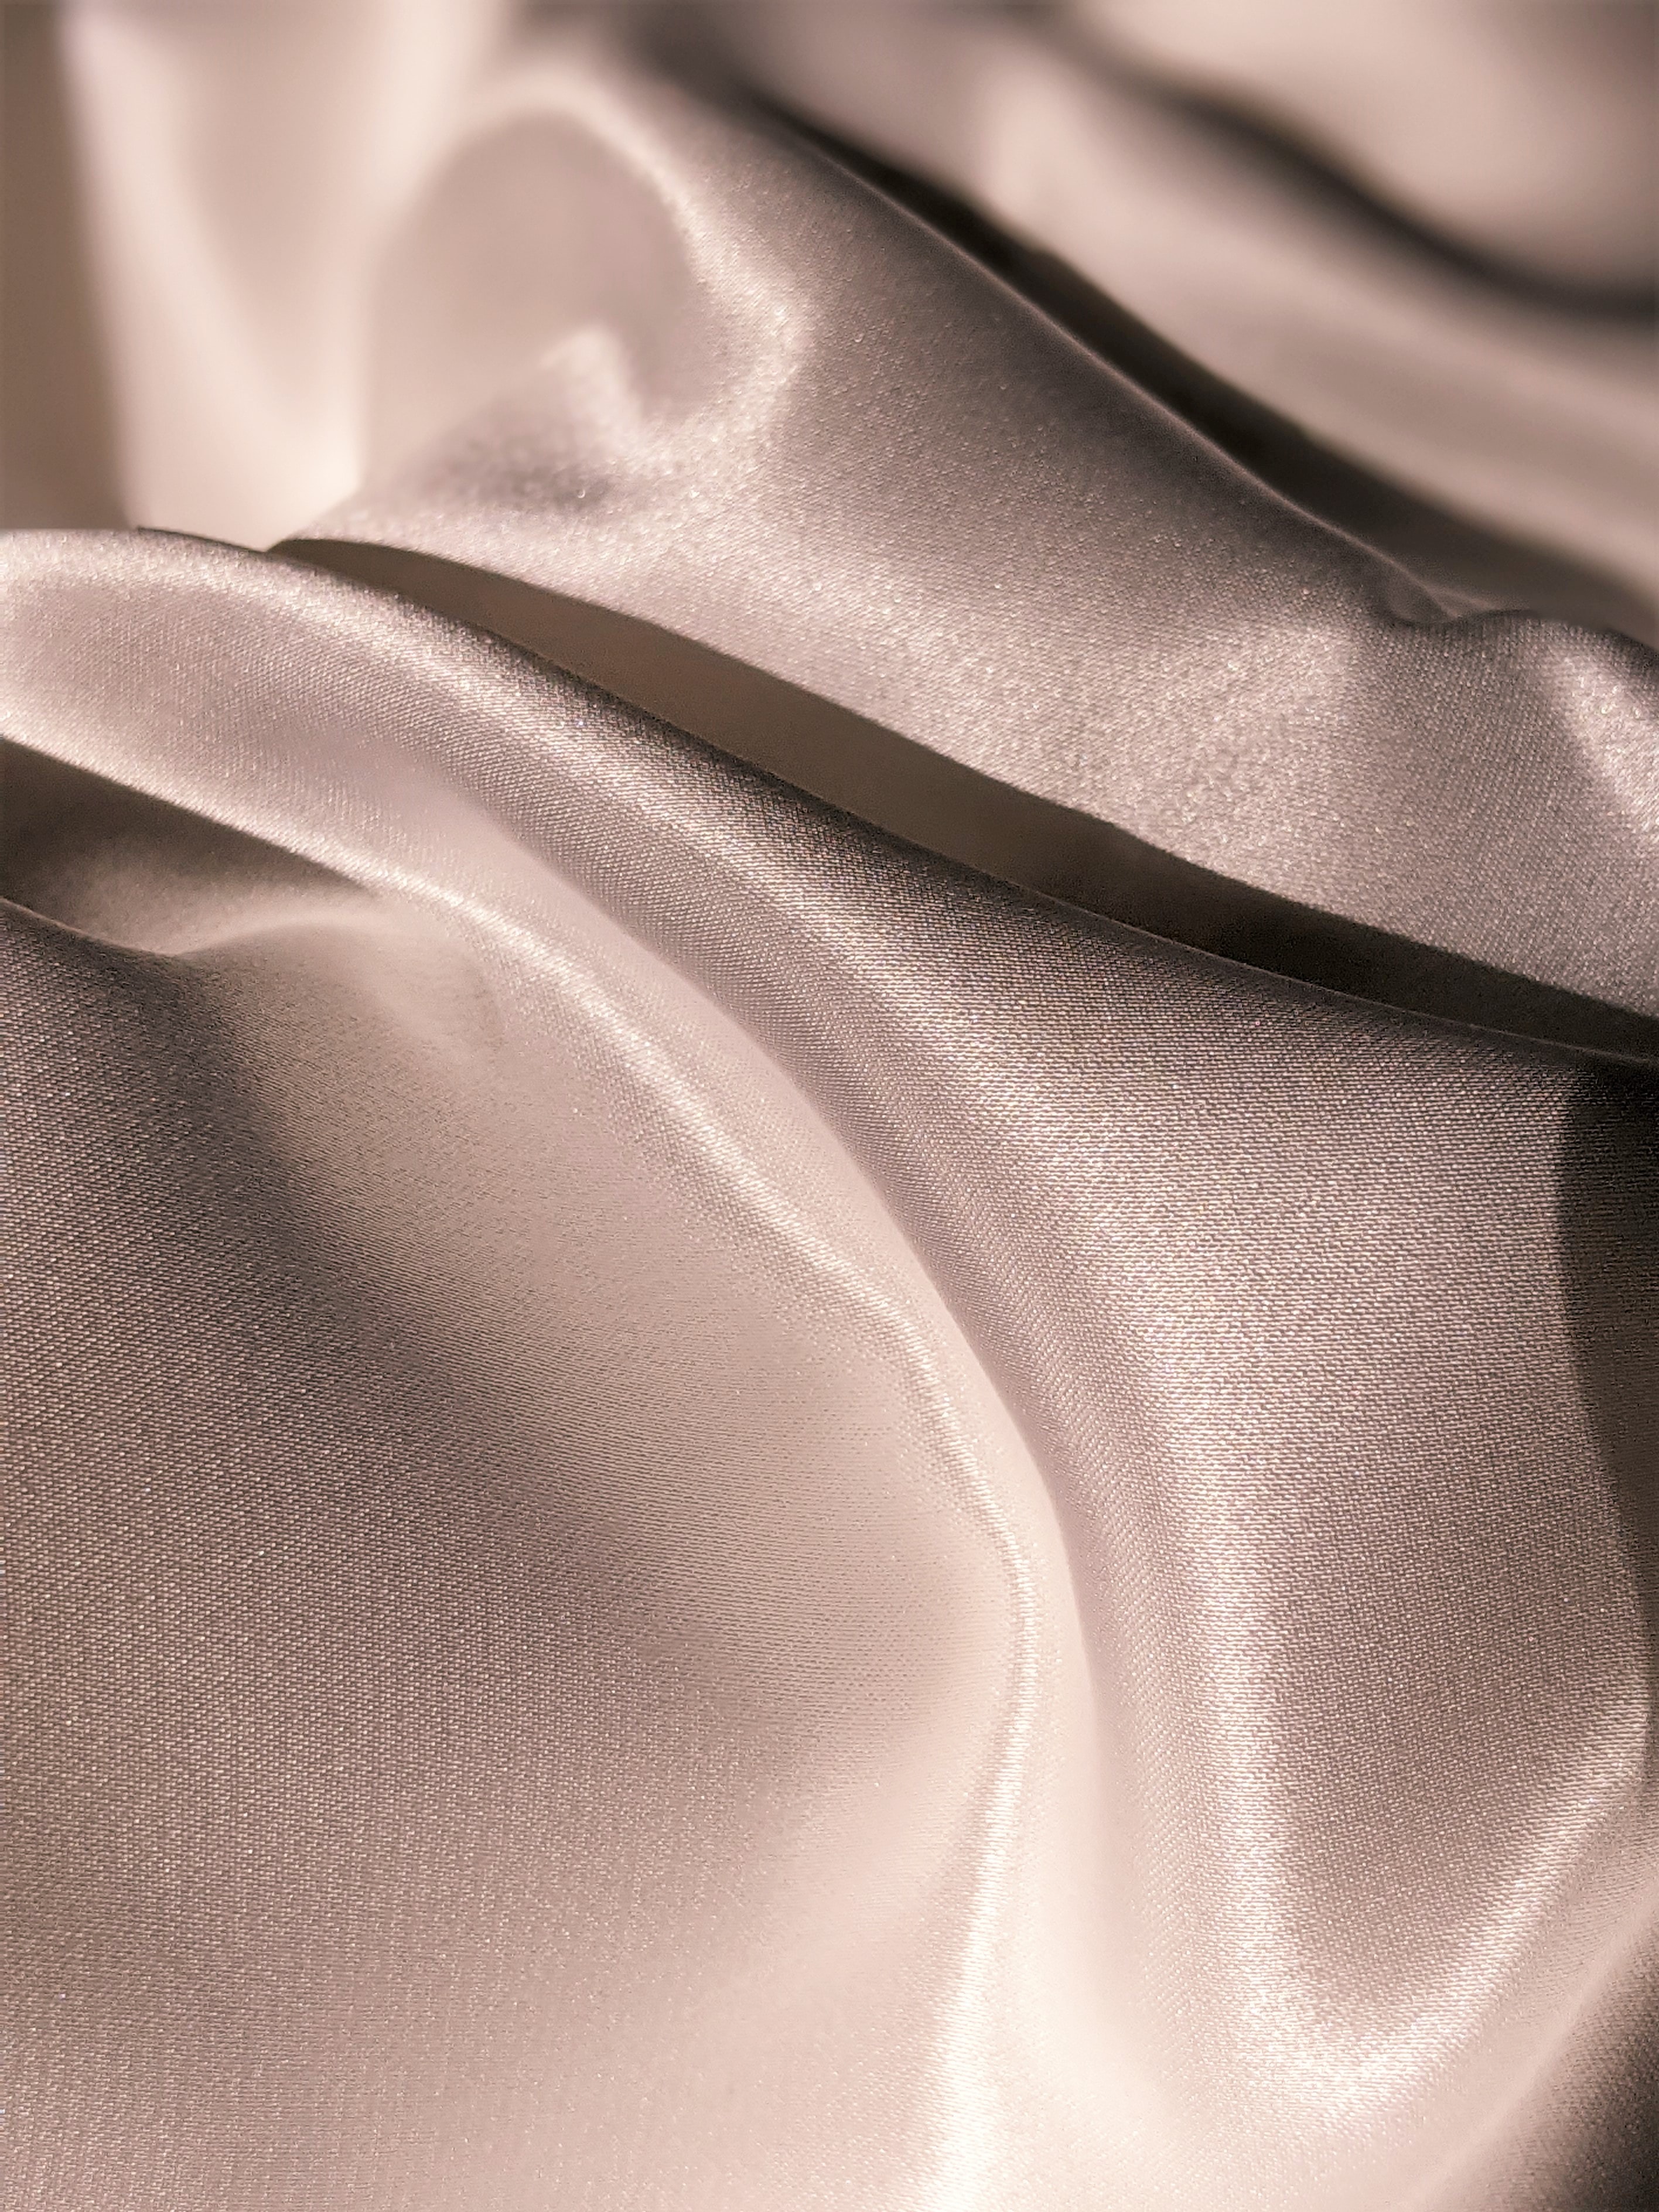 silk, texture, textures, cloth, folds, pleating